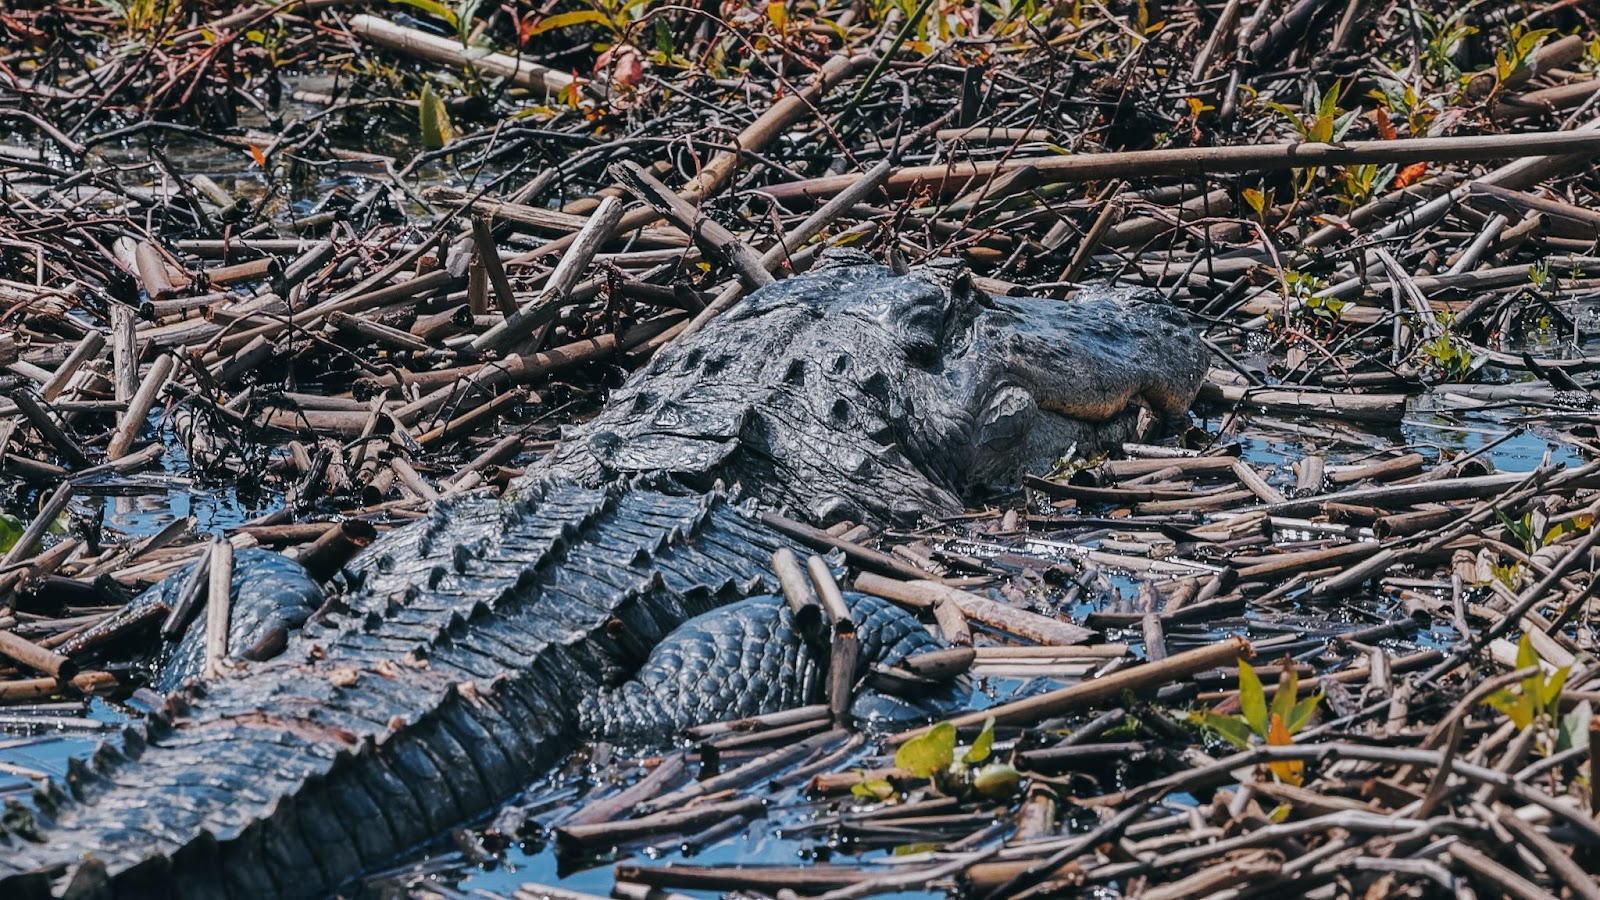 An adult alligator sunbathes at the Wild Florida Everglades